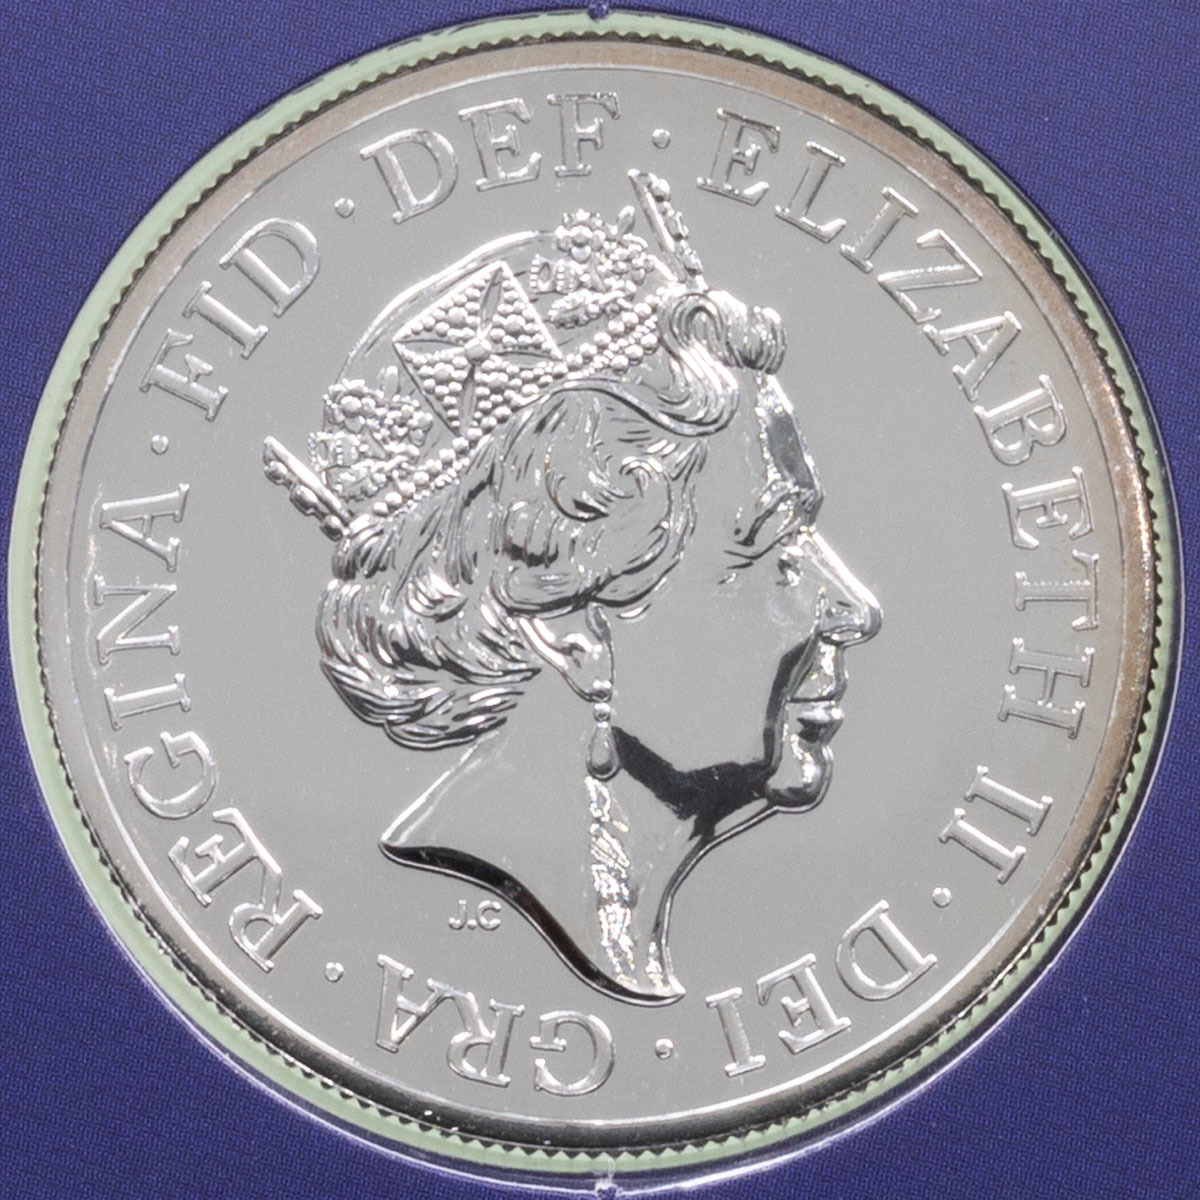 UK15BR50 2015 Britannia Fifty Pound Silver Brilliant Uncirculated Coin In Folder Obverse